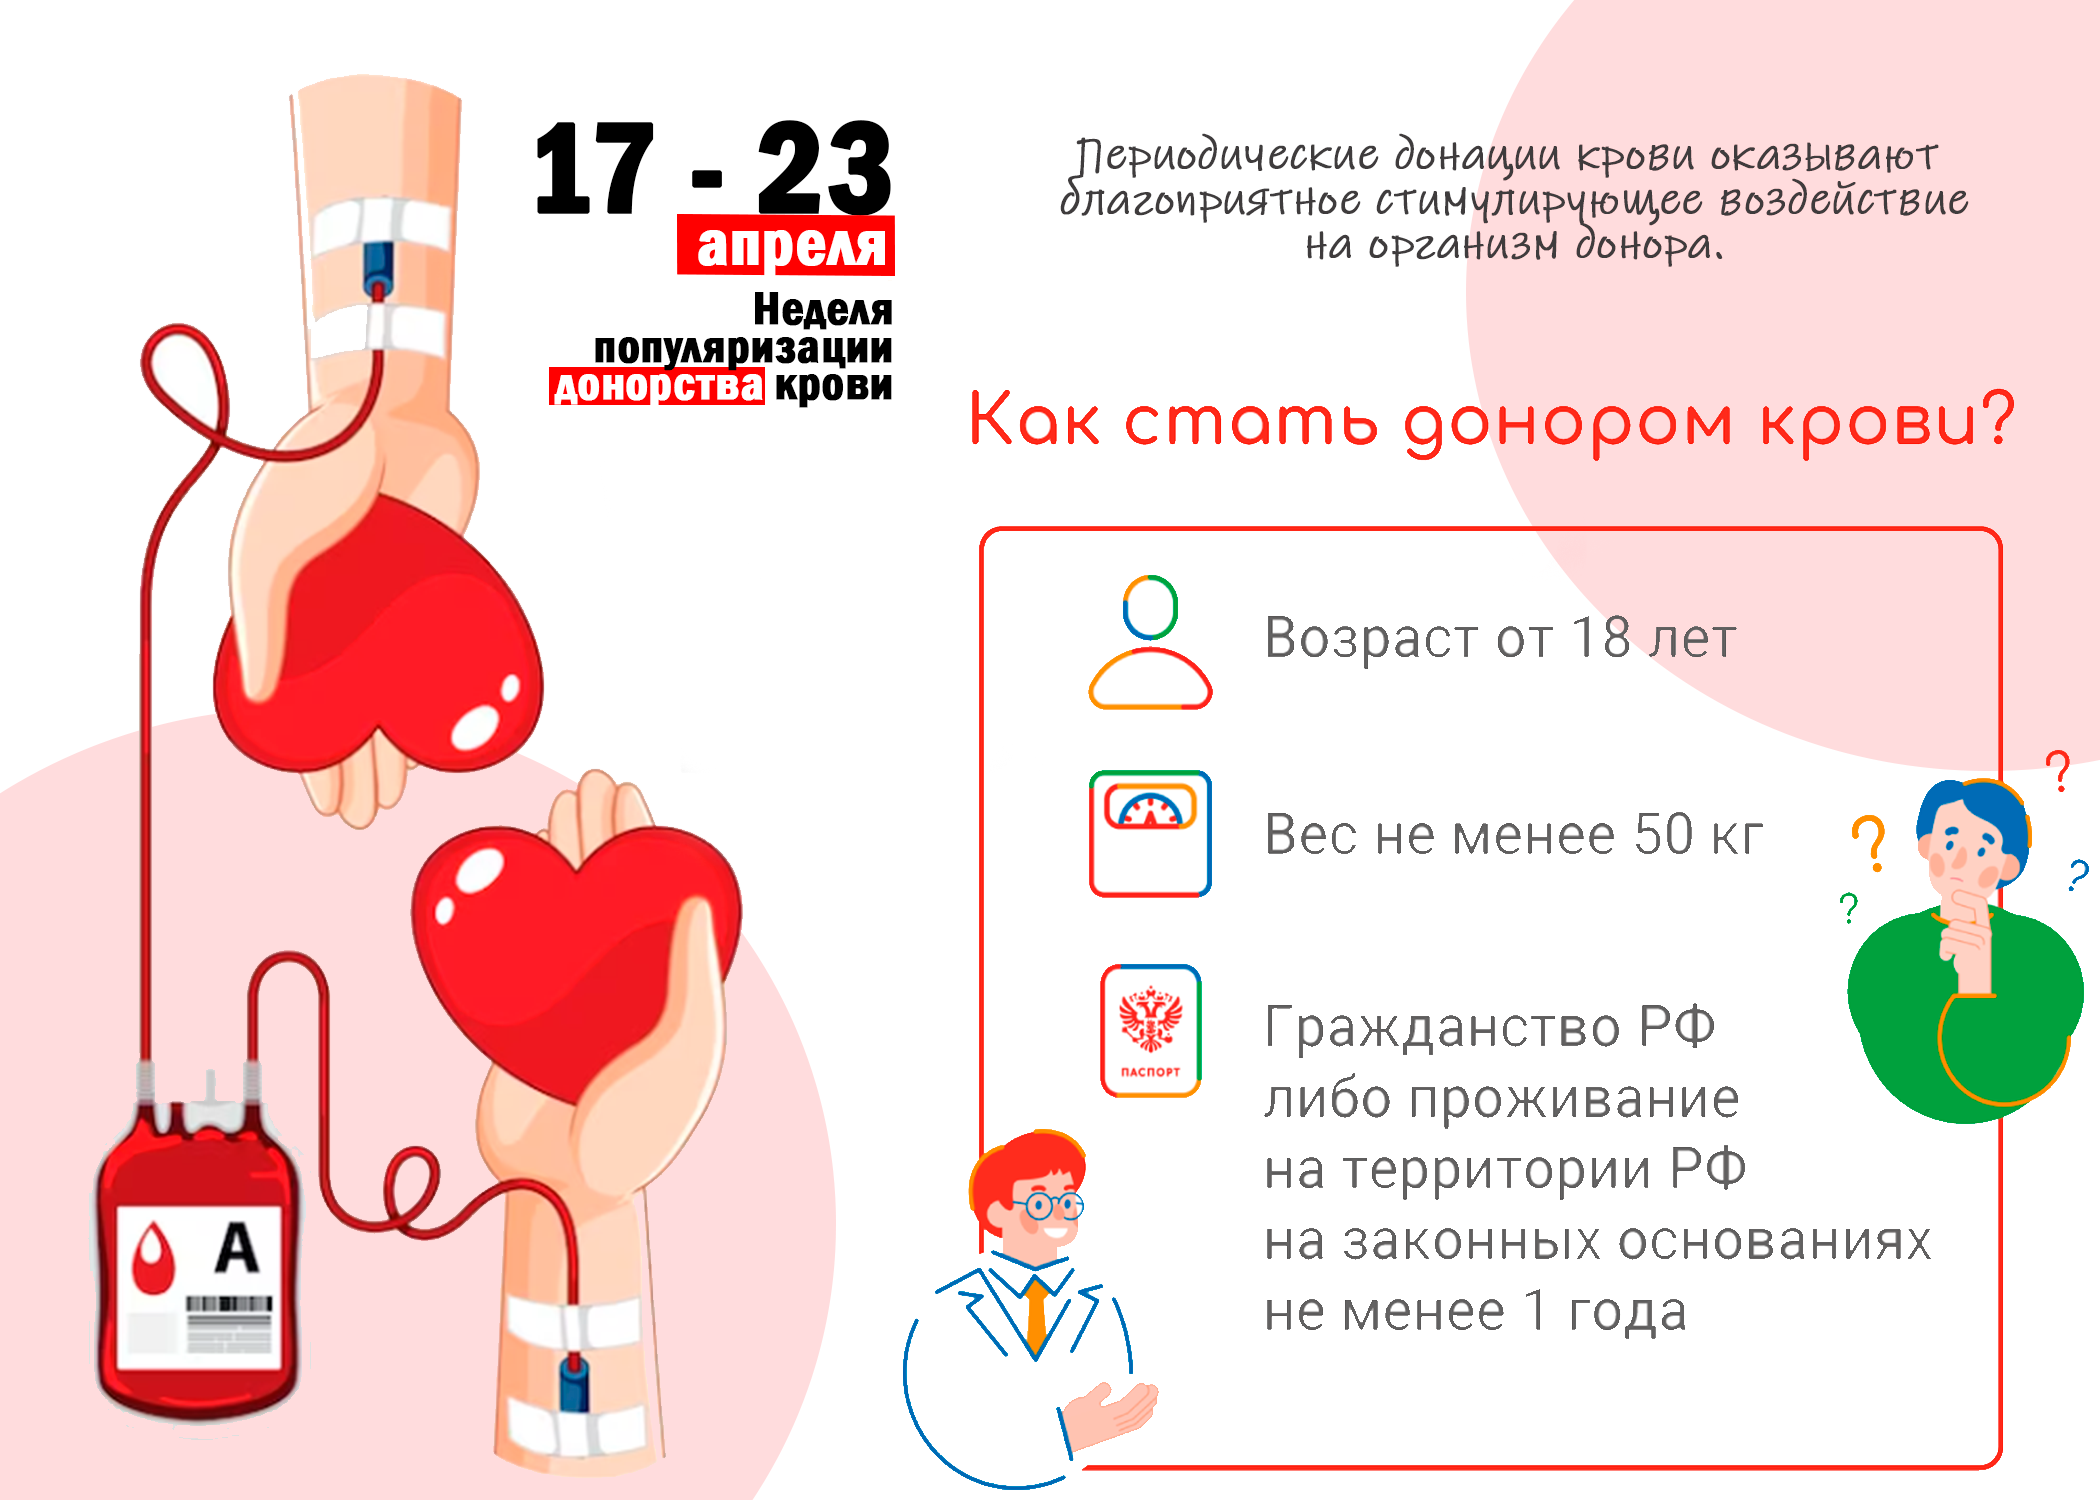 Донорство крови. Неделя донора крови. Донорство в России. День донора крови в России. Неделя донорства крови